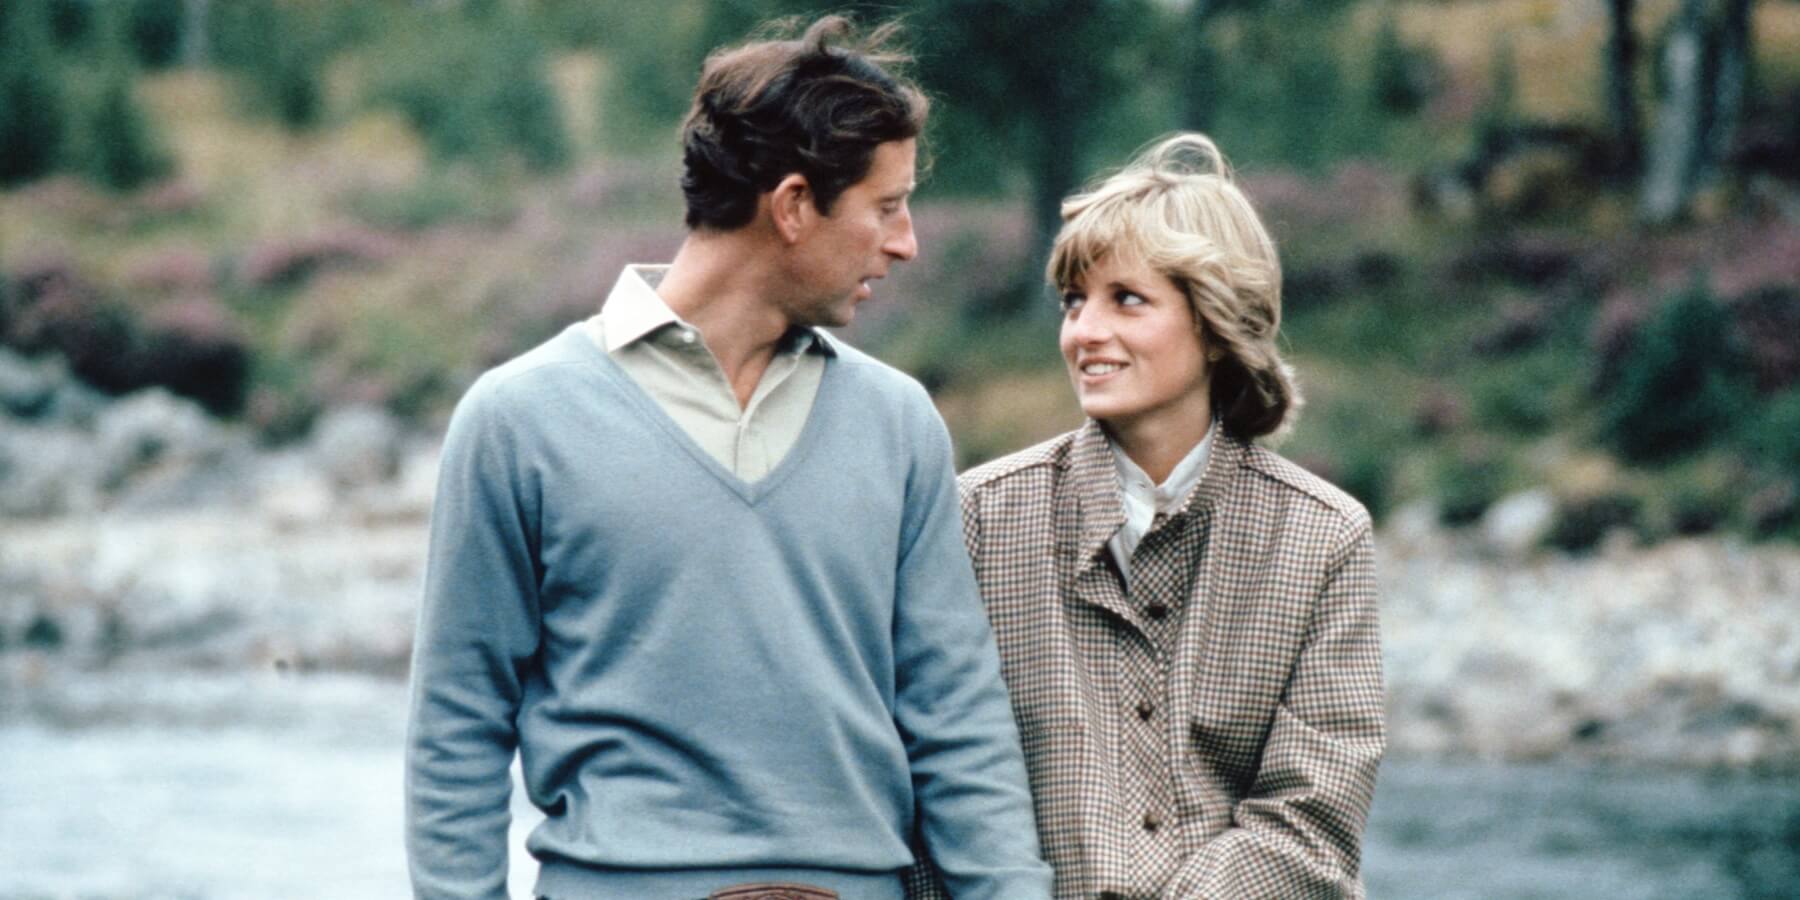 Prince Charles and Princess Diana on their 1981 honeymoon